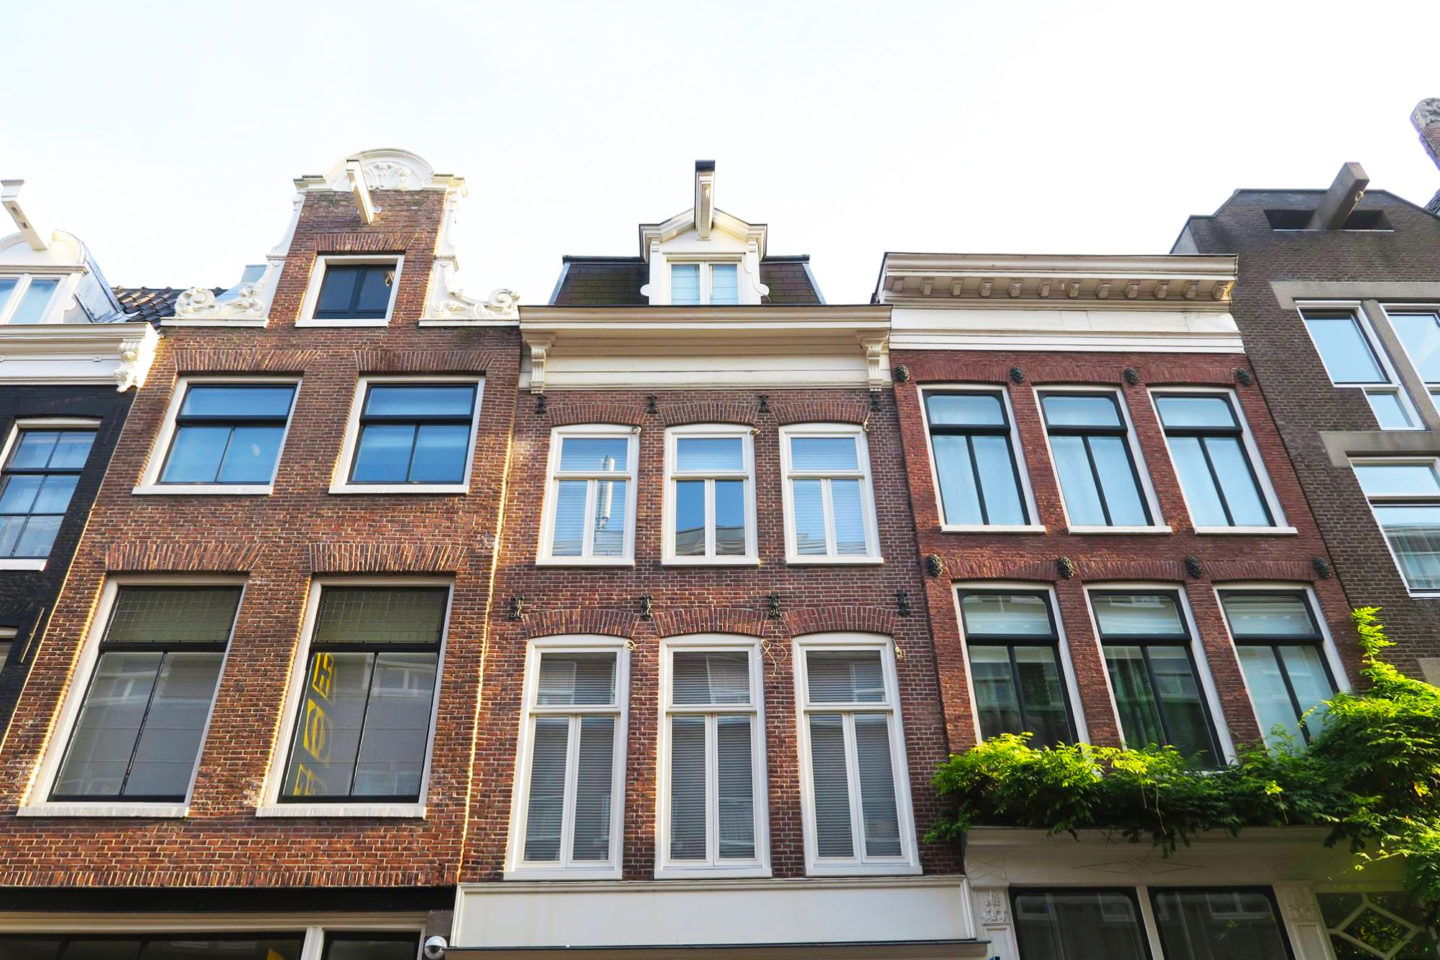 amsterdam houses